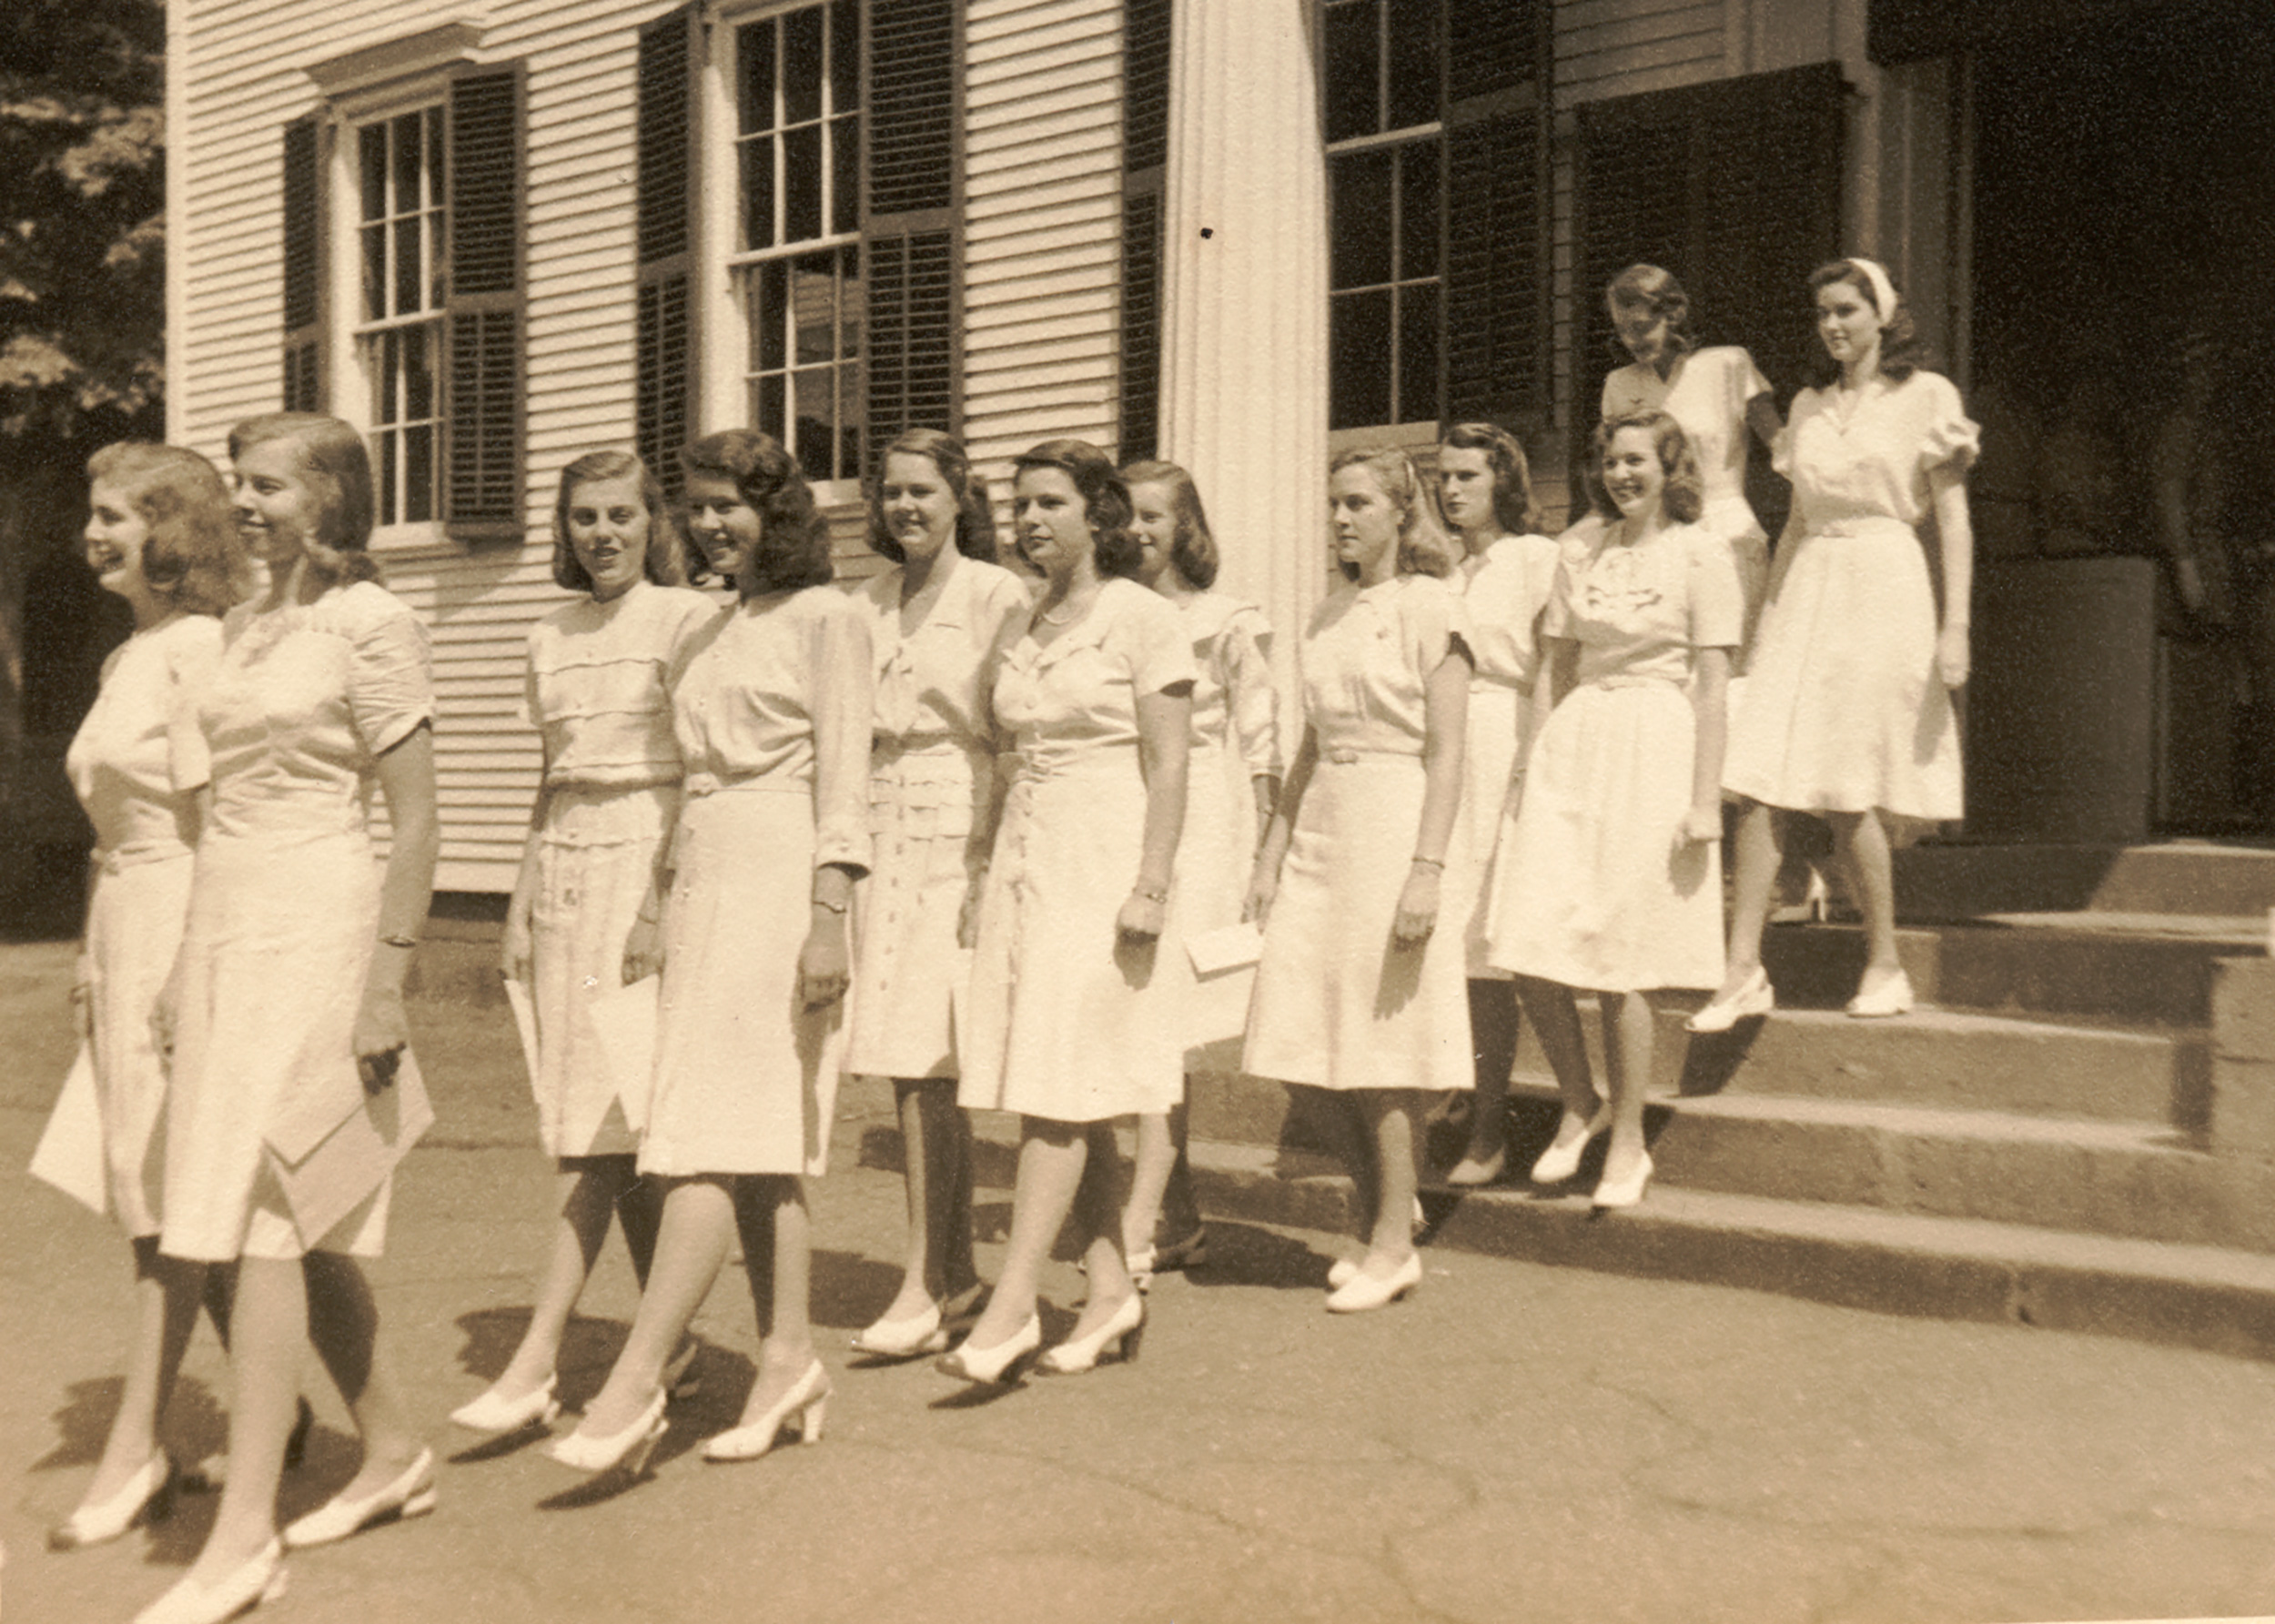 Graduation - 1940s